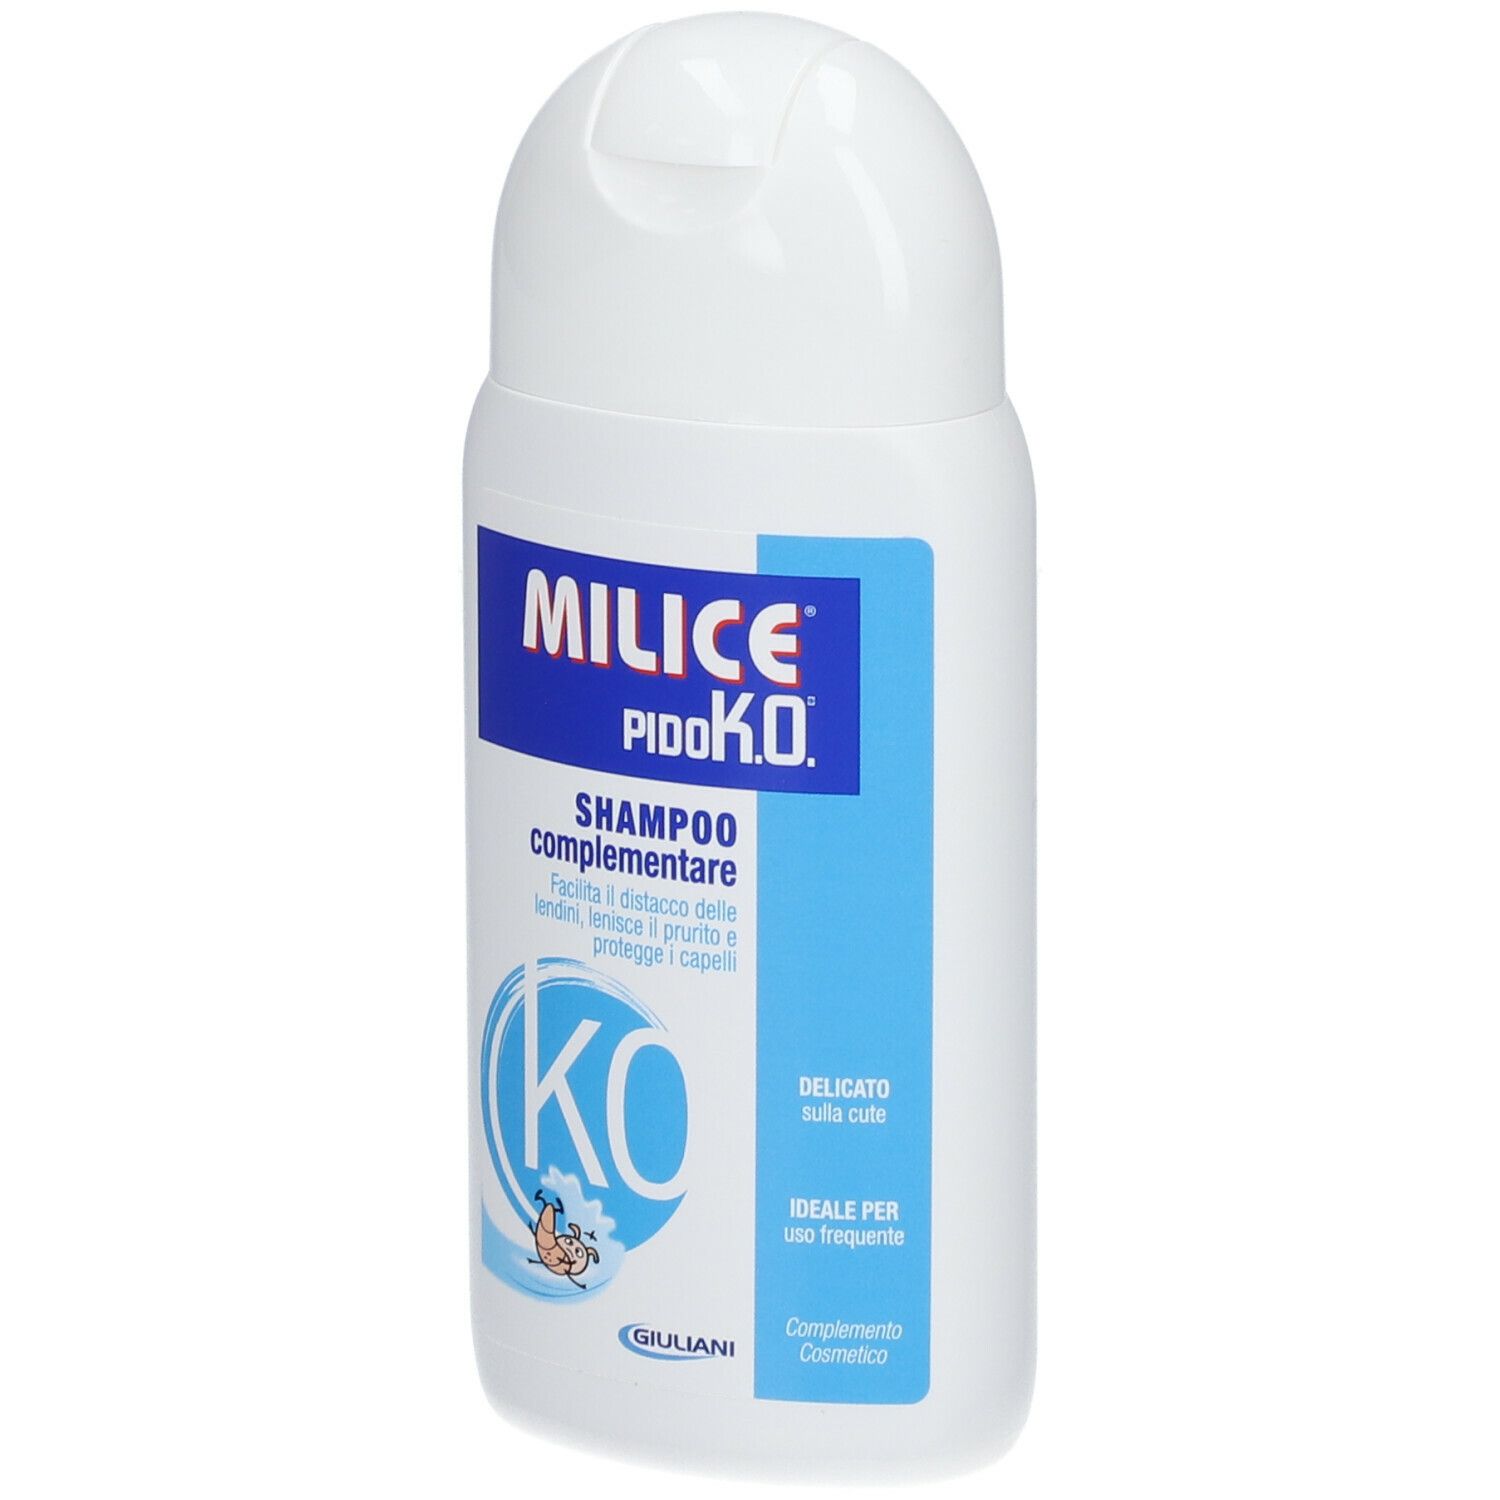 MILICE® PidoK.O. Shampoo Complementare